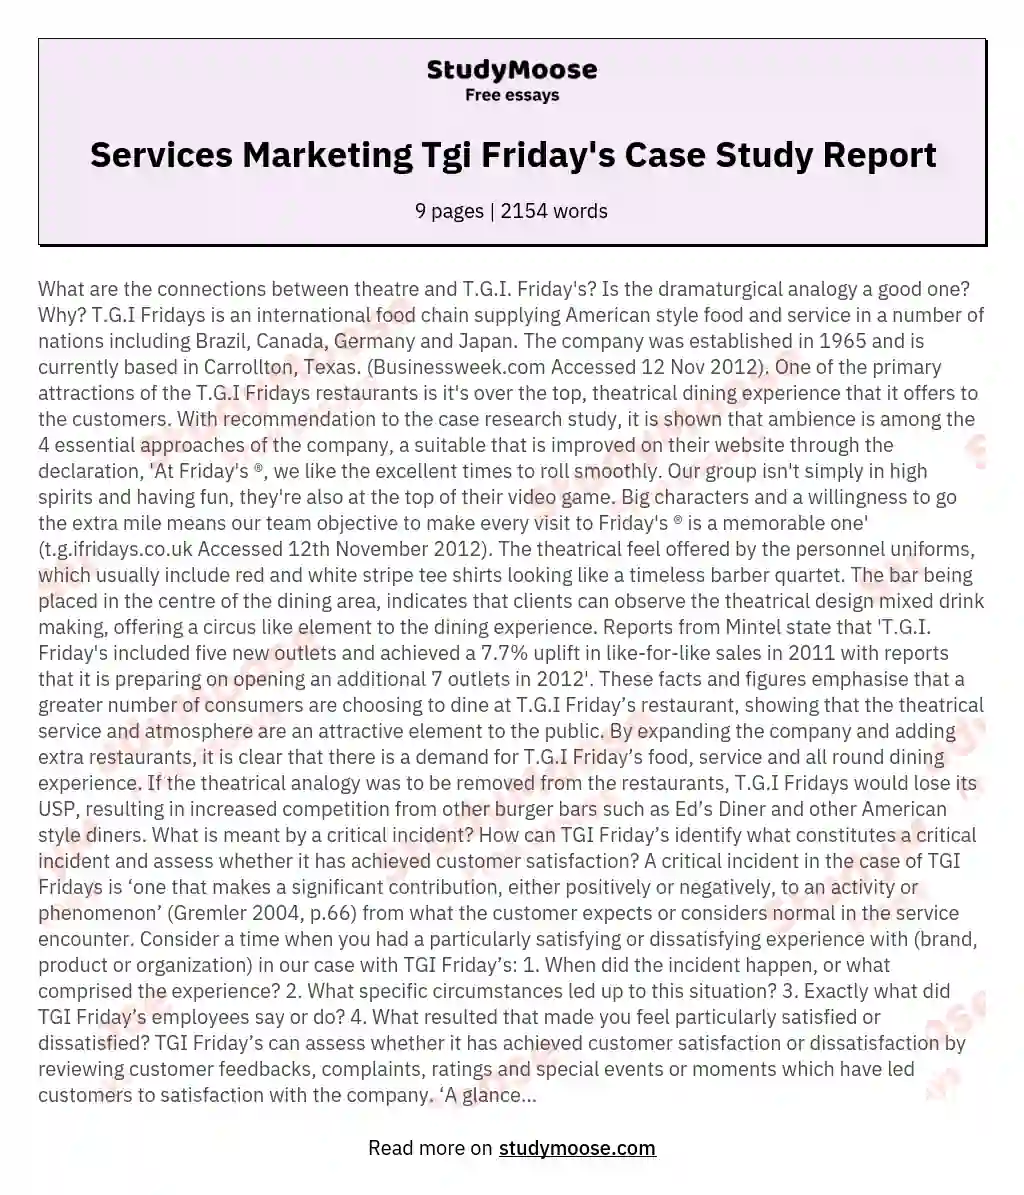 Services Marketing Tgi Friday's Case Study Report essay